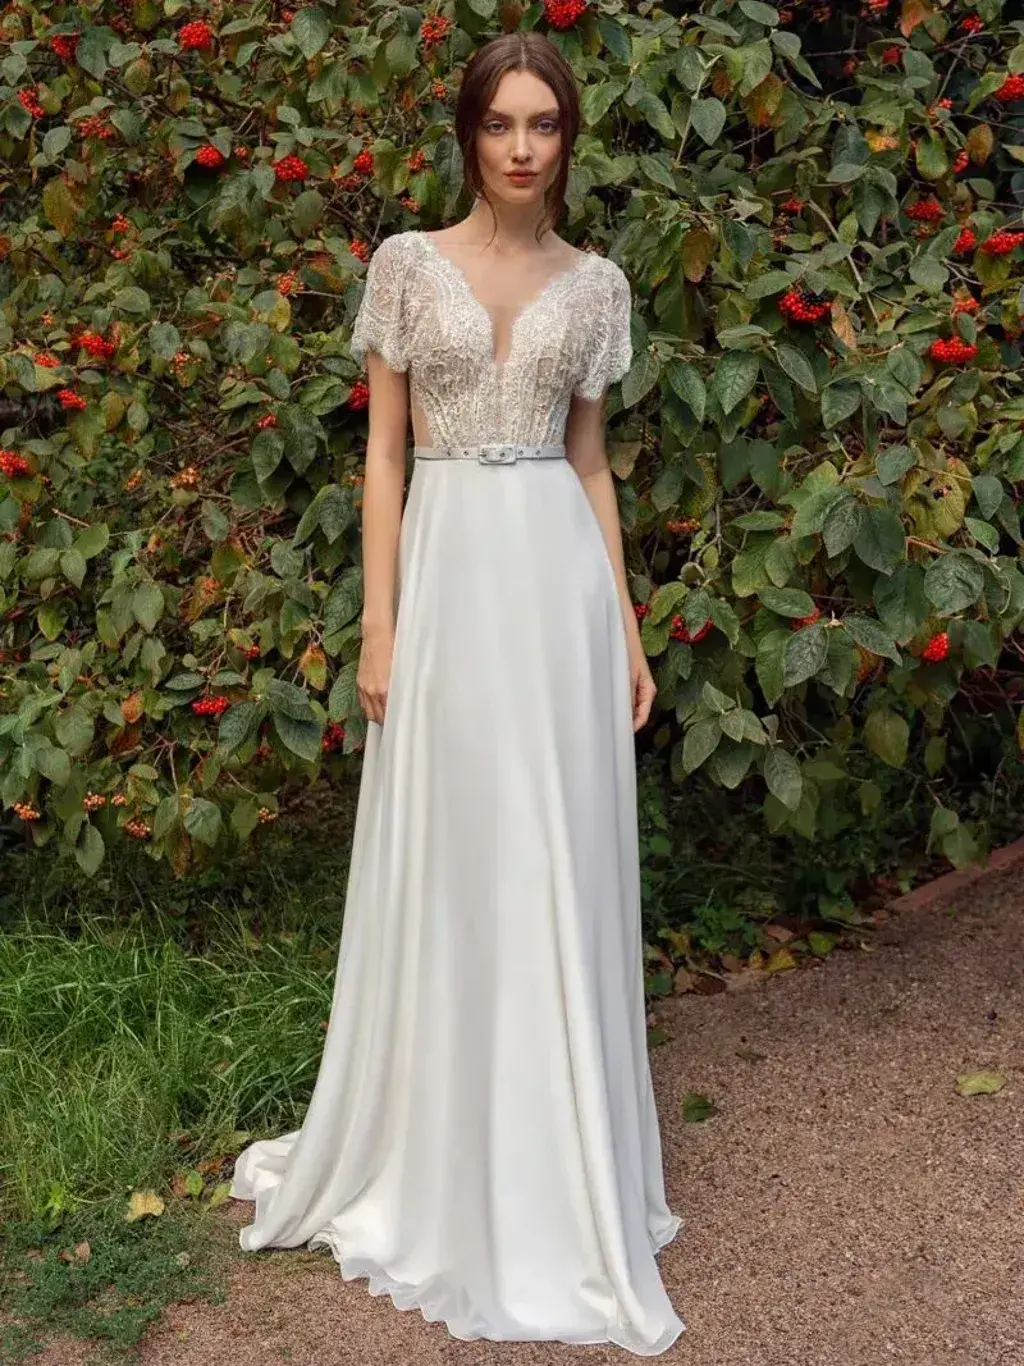 Cap Sleeves Wedding Dress Styles